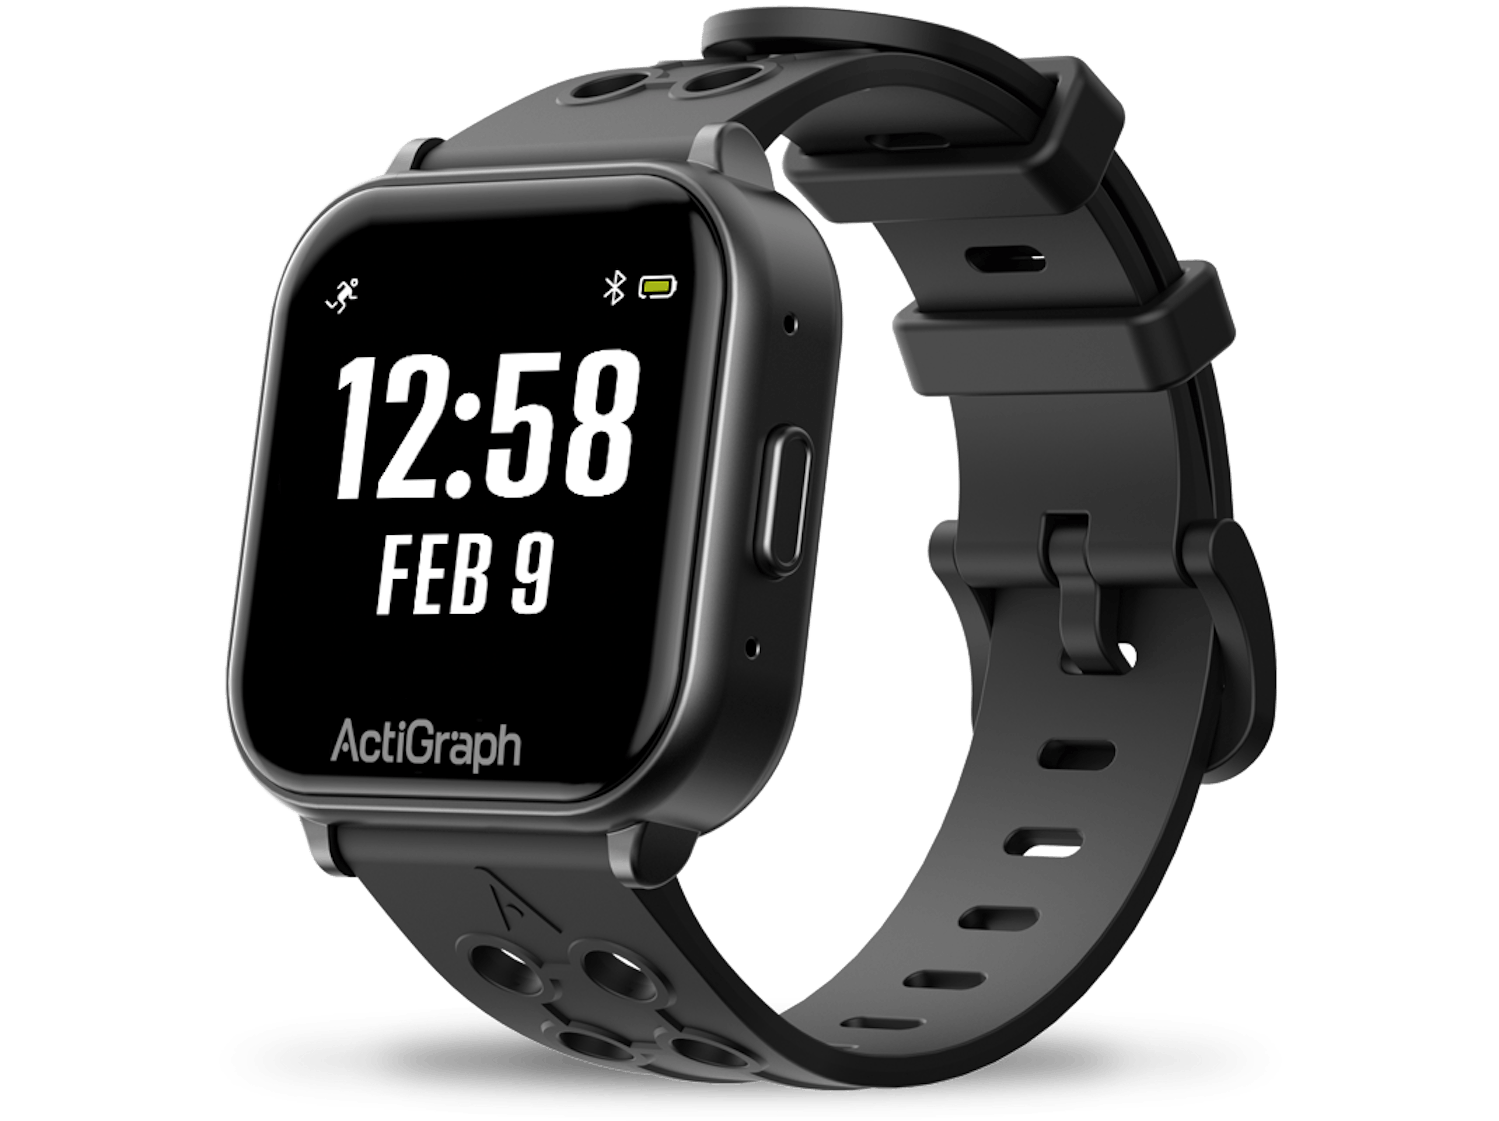 ActiGraph LEAP™ smart wearable device.